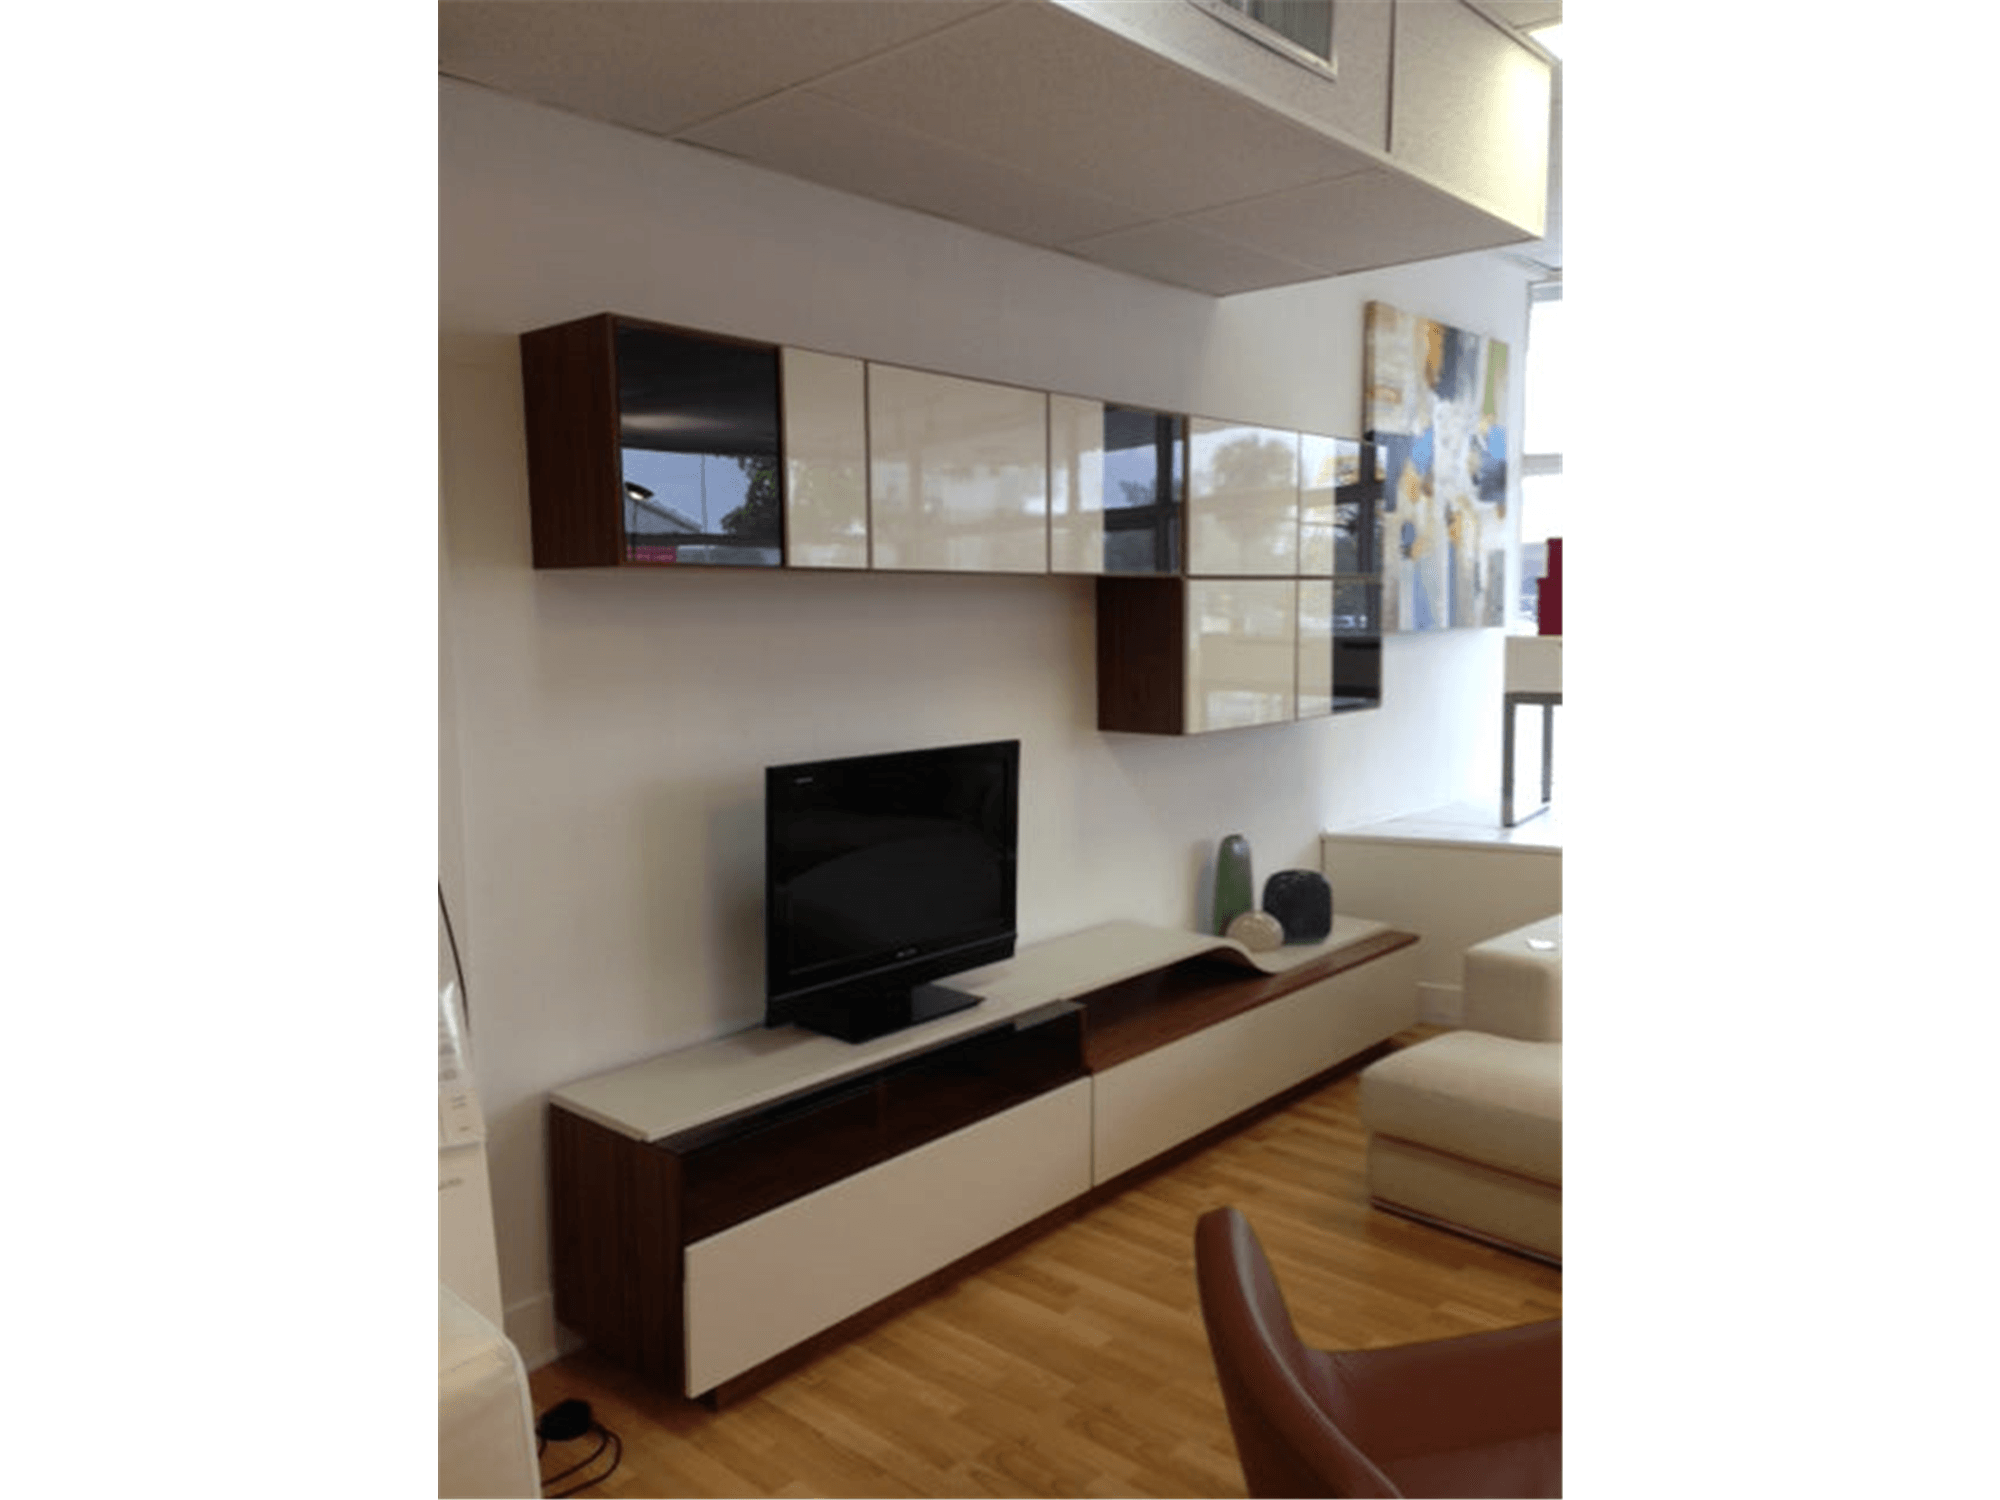 Curbano TV Unit - Euro Living Furniture